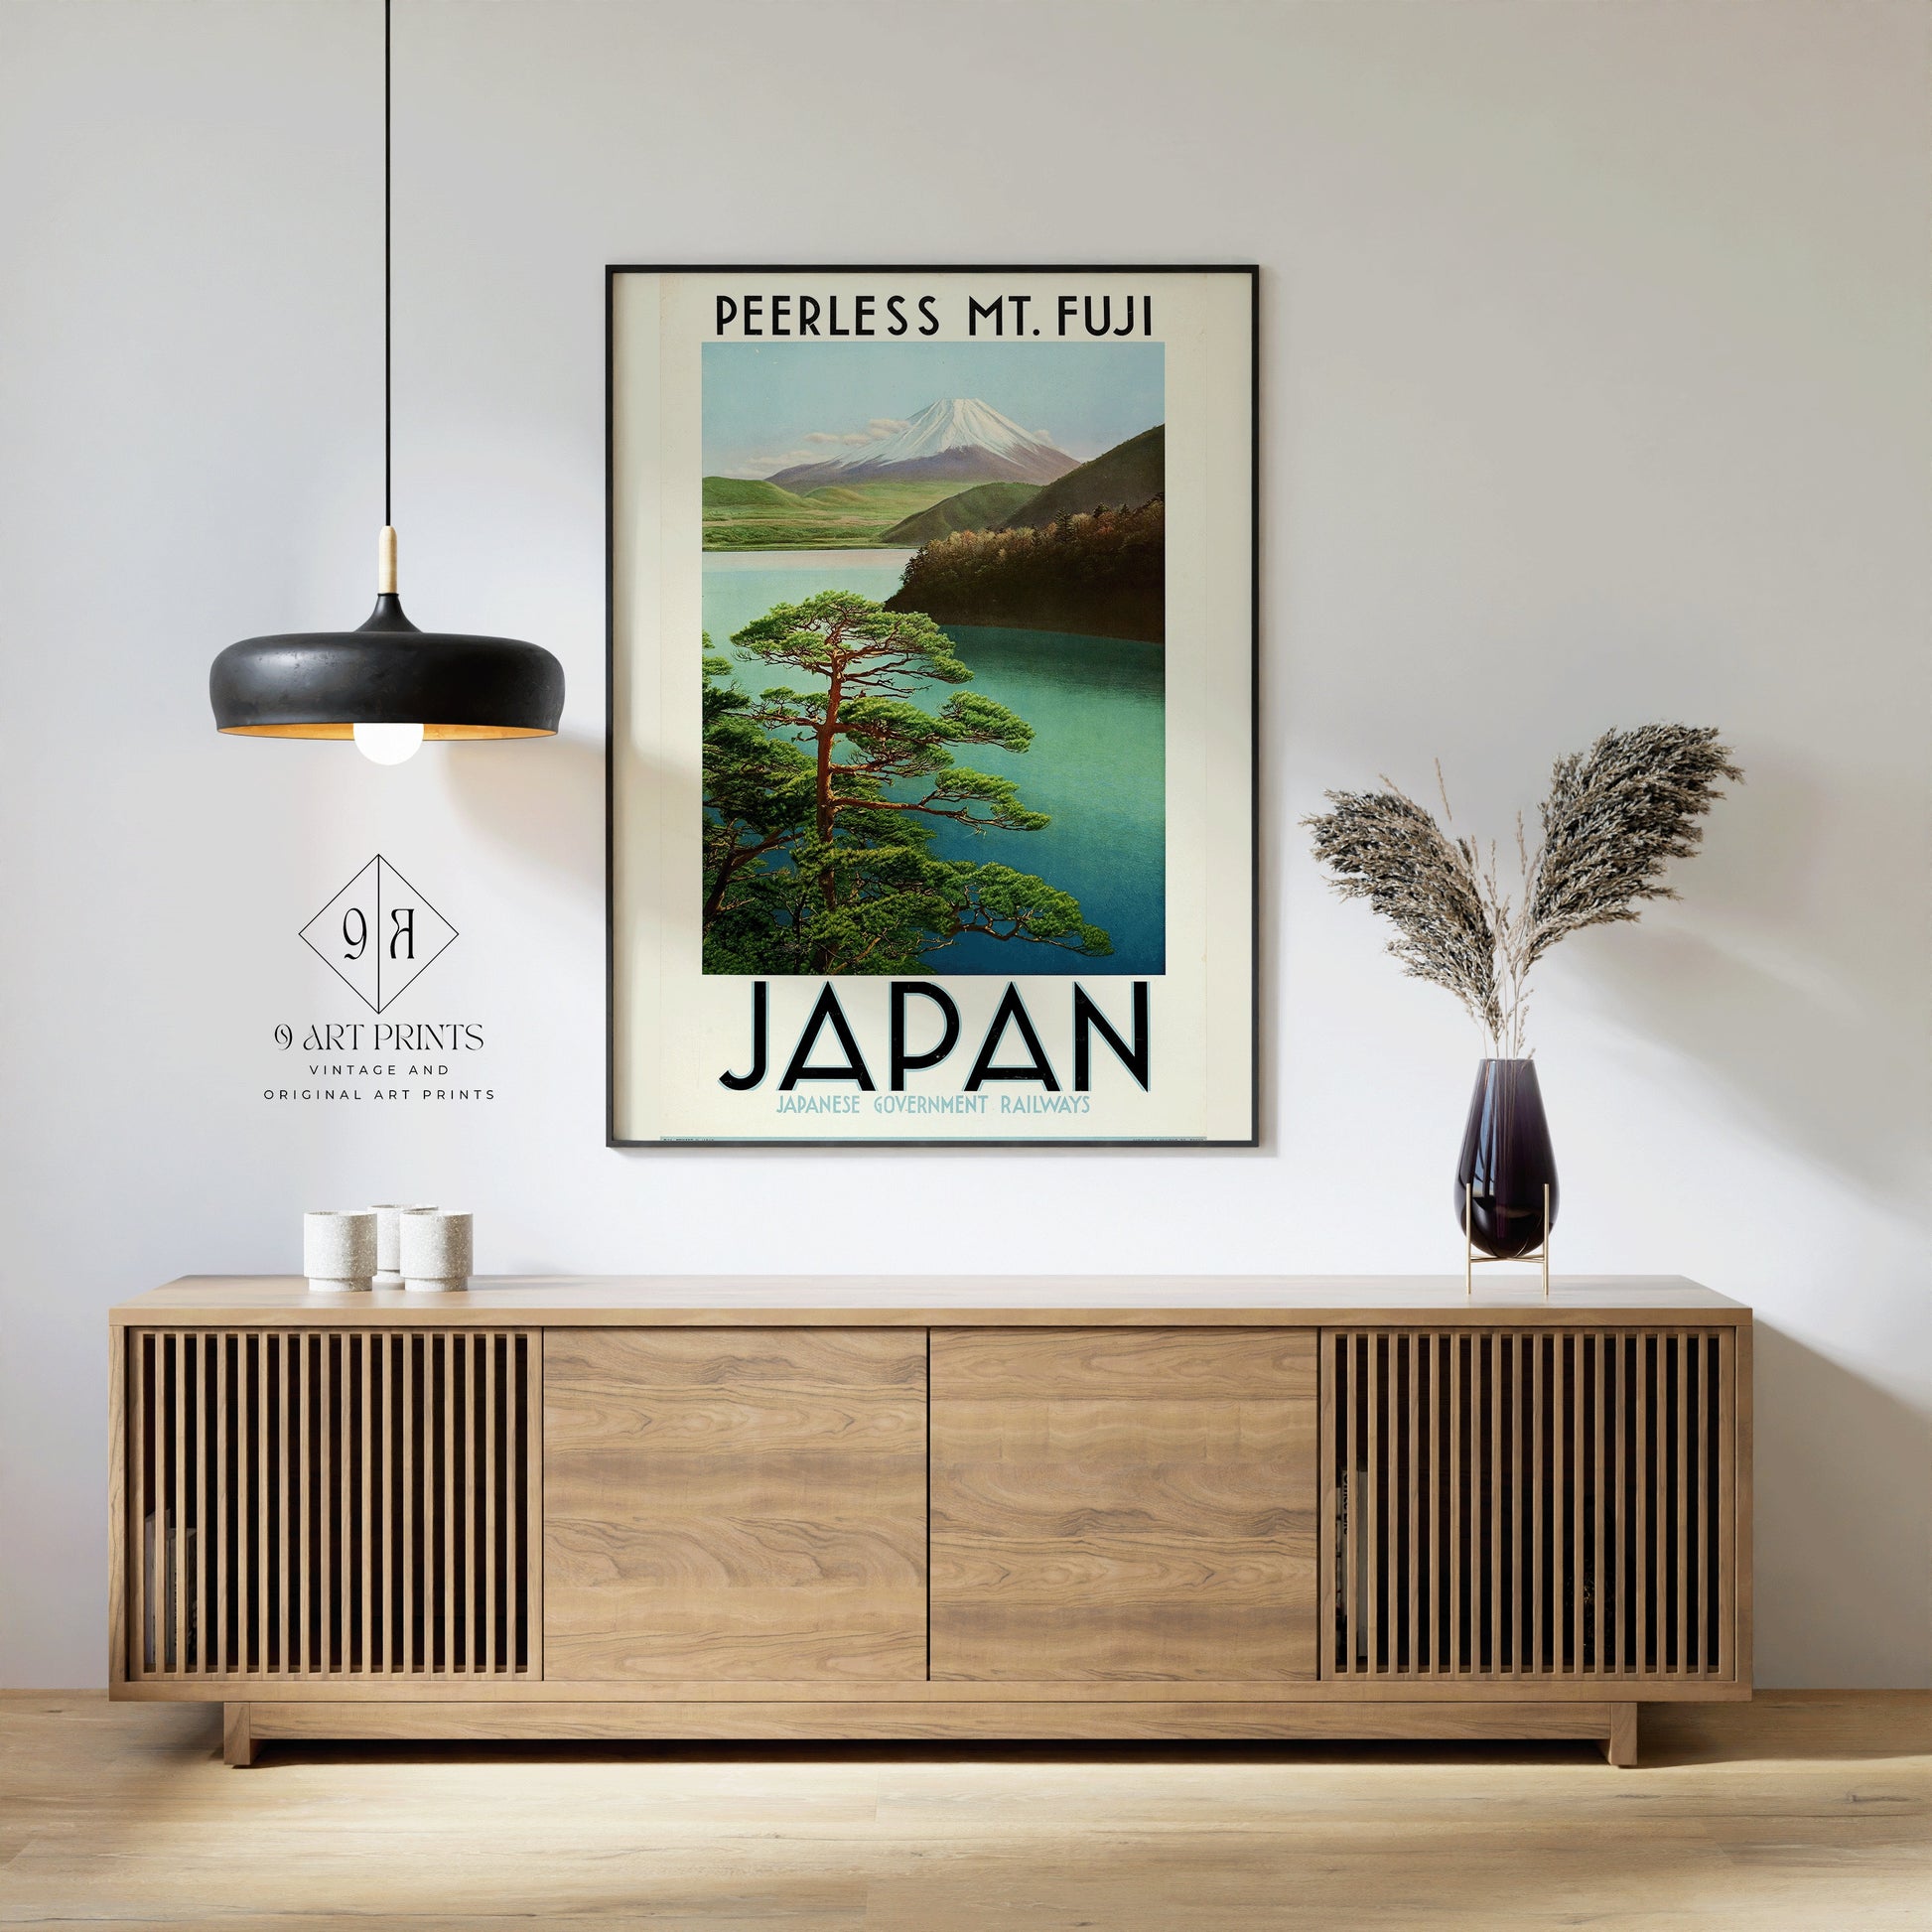 Framed Vintage Travel Poster Japan Art Print Exhibition Poster Portrait Modern Gallery Framed Ready to Hang Home Office Decor